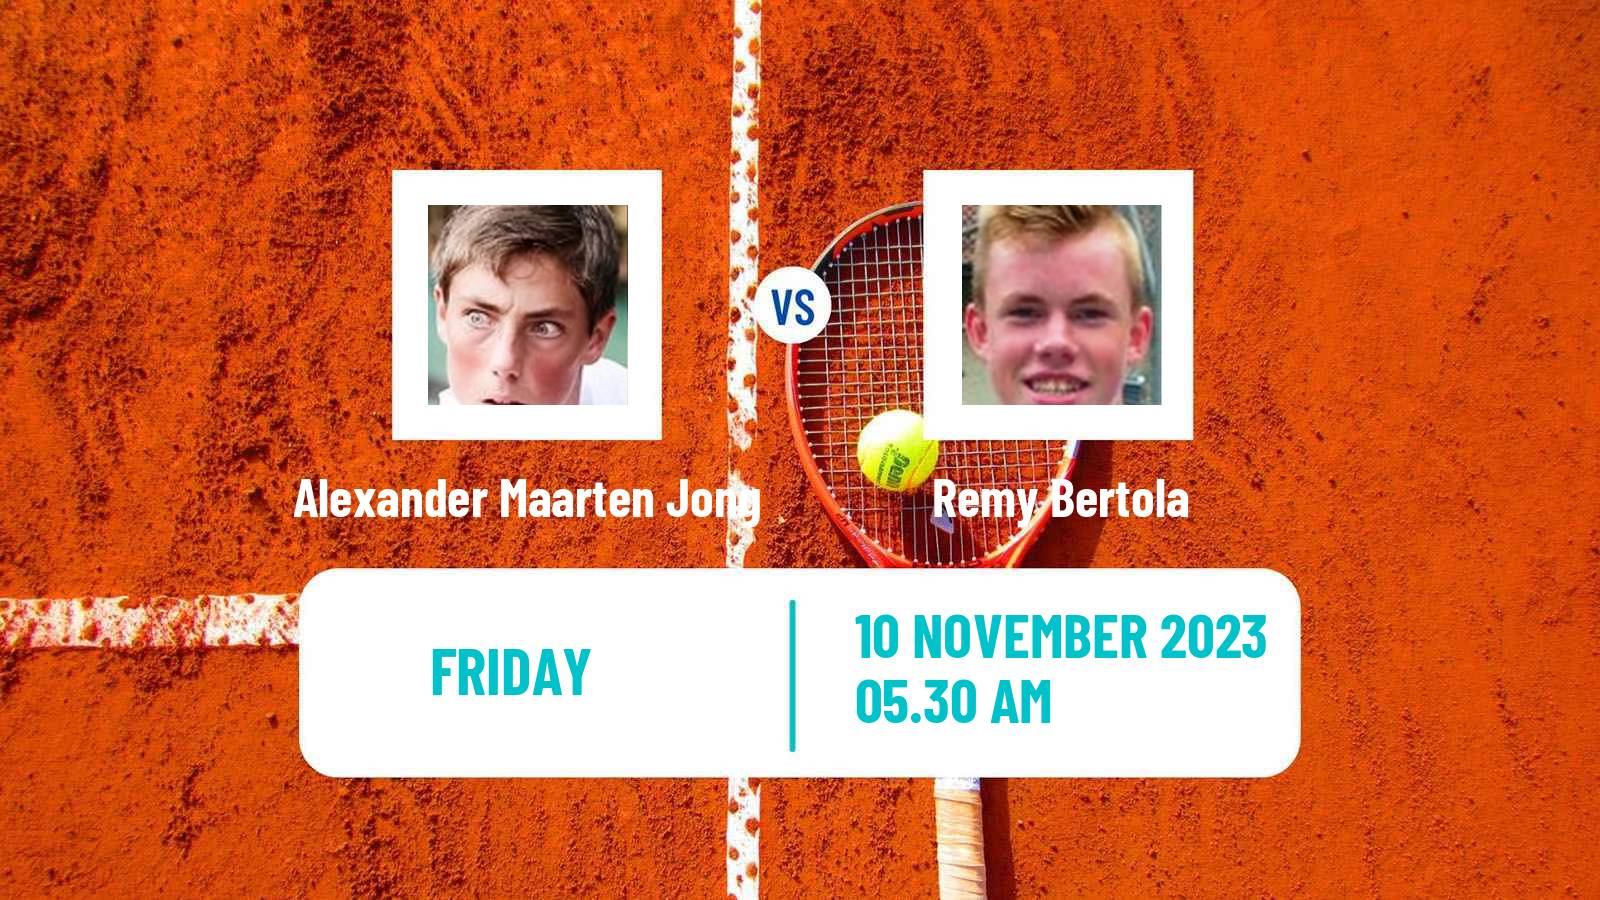 Tennis ITF M25 Trnava 2 Men Alexander Maarten Jong - Remy Bertola